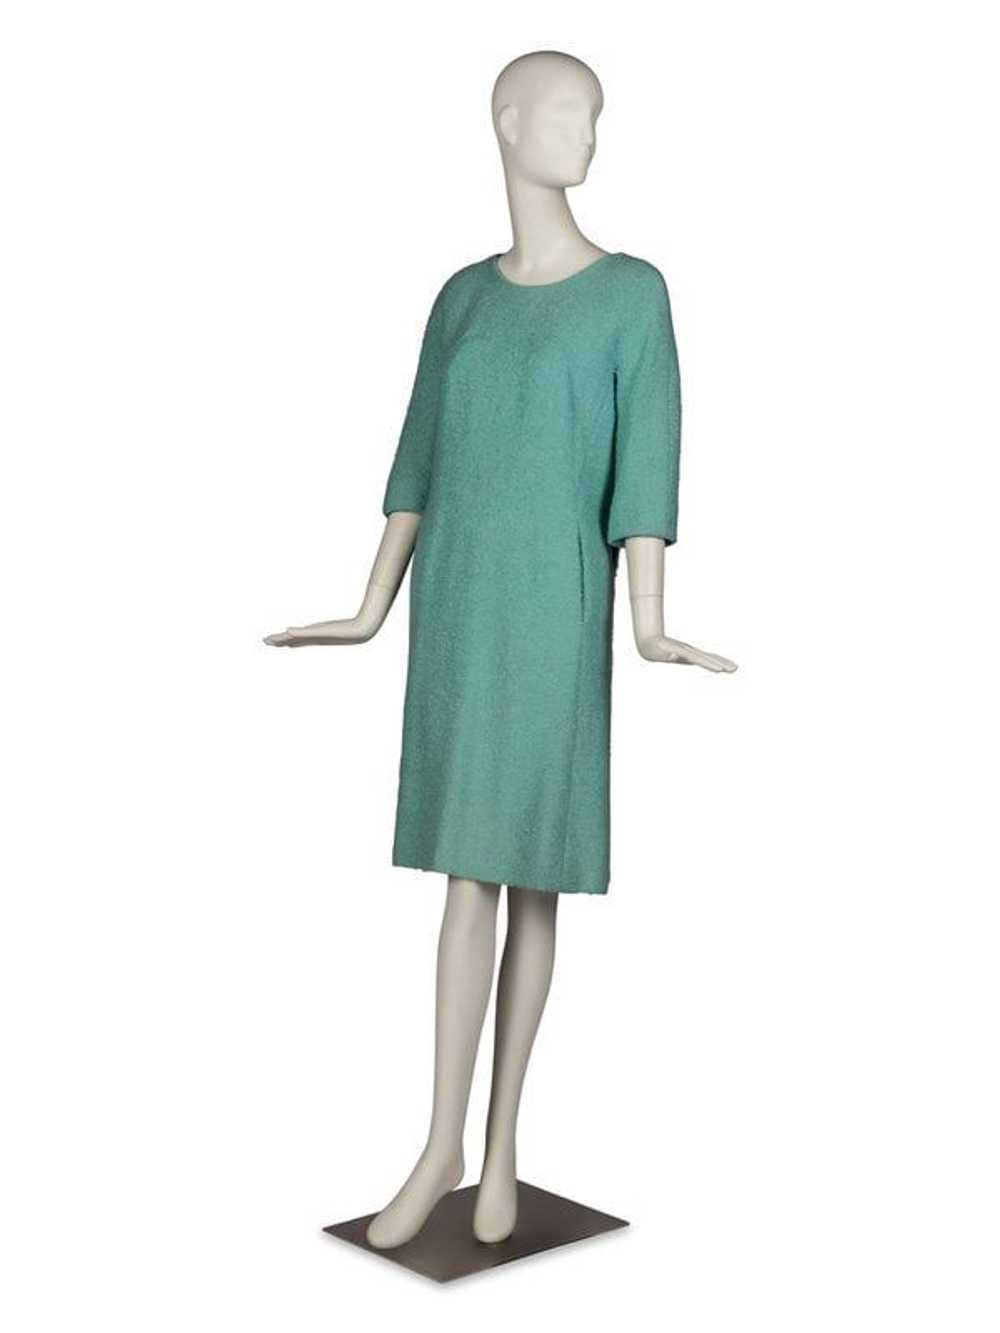 Balenciaga Haute Couture Dress,1960s - image 2